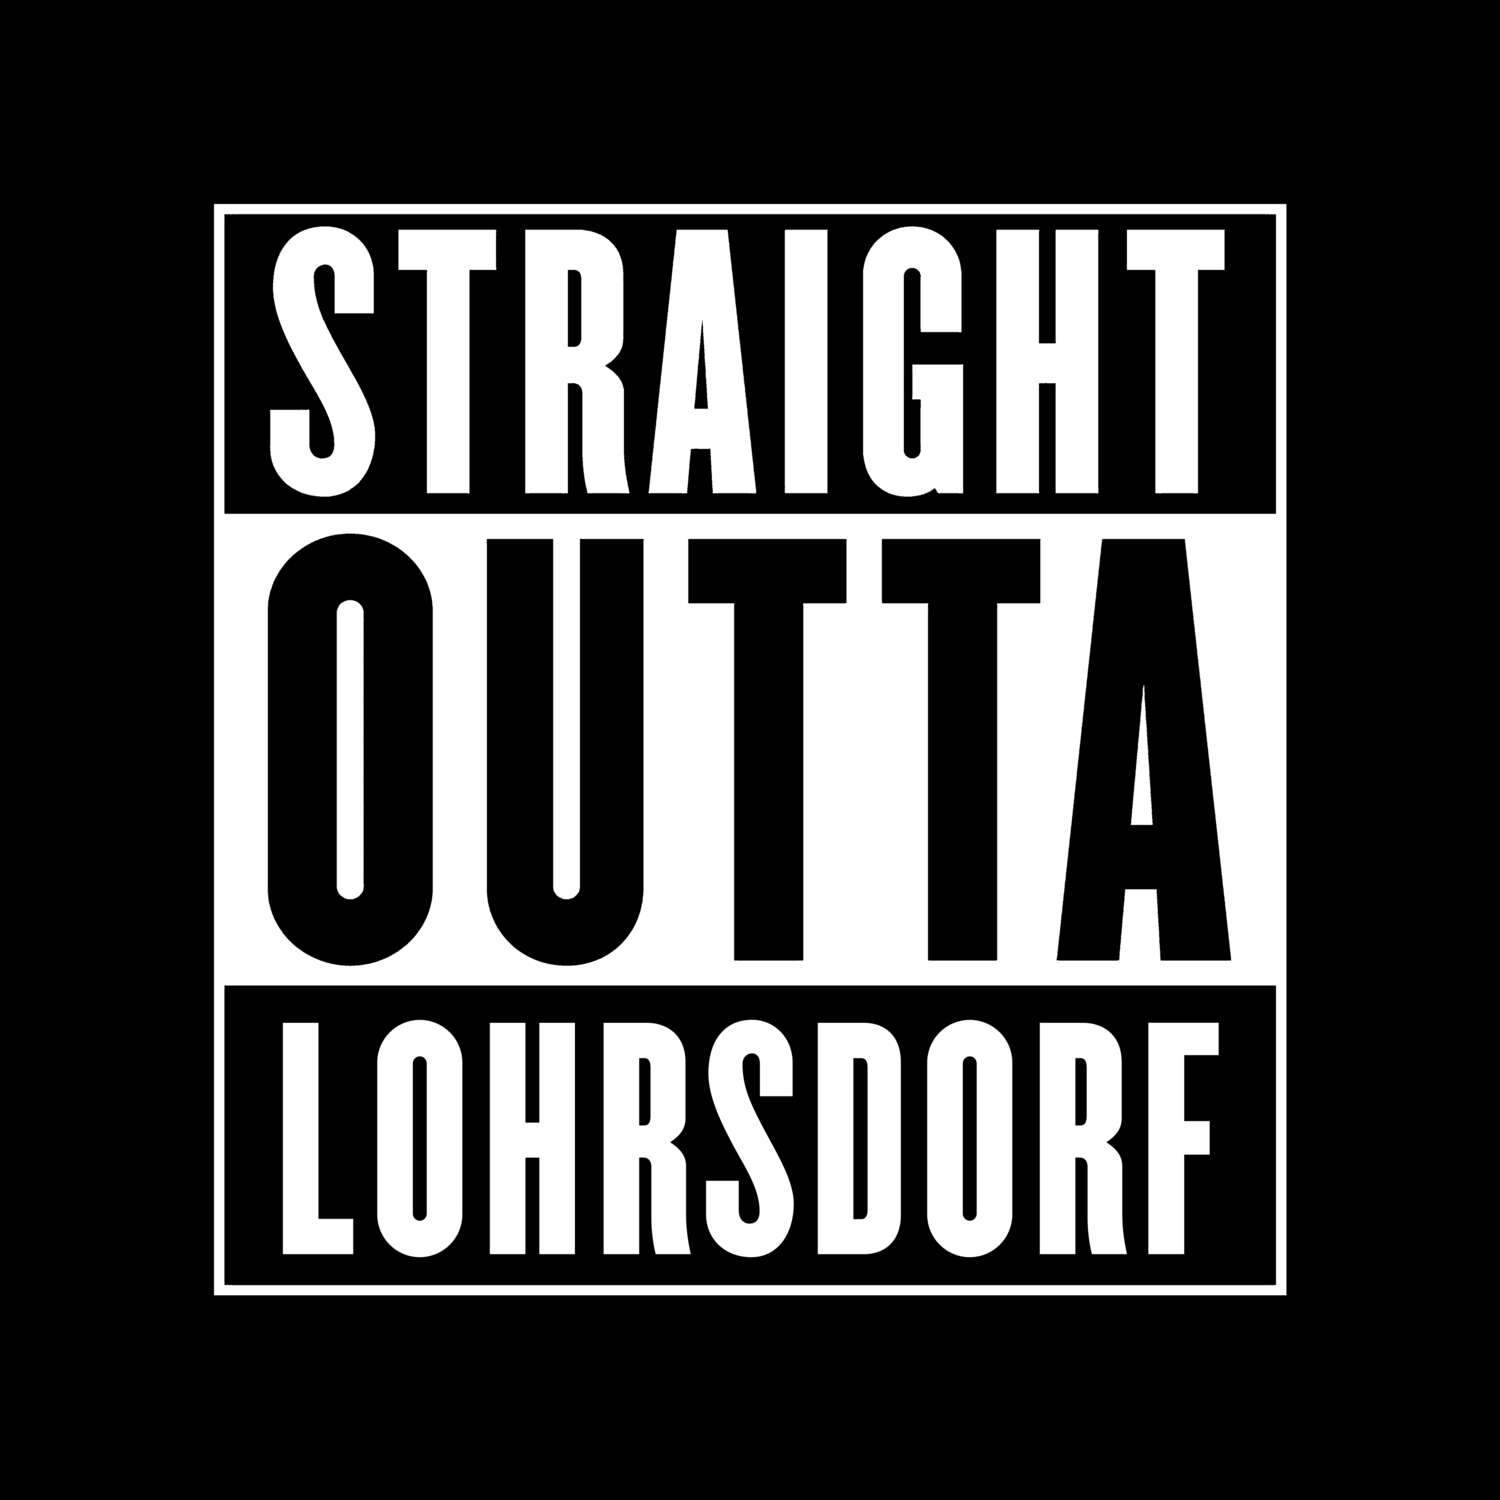 Lohrsdorf T-Shirt »Straight Outta«